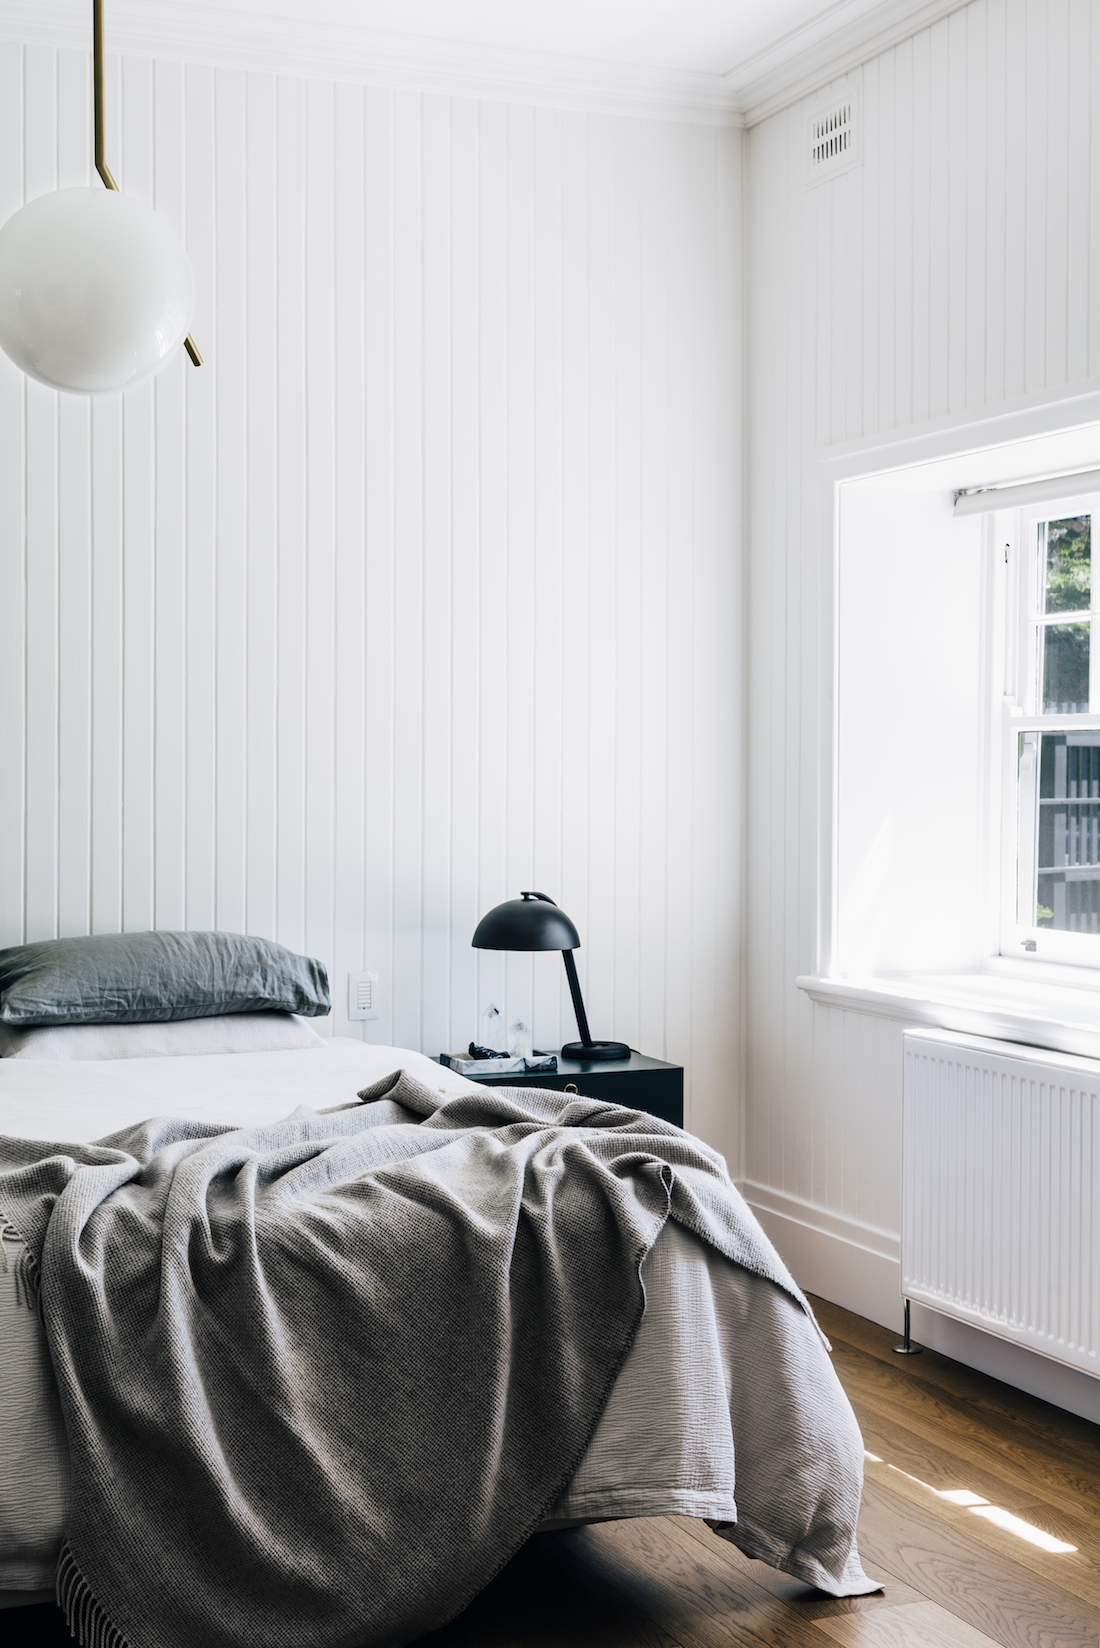 Simple styled bedroom